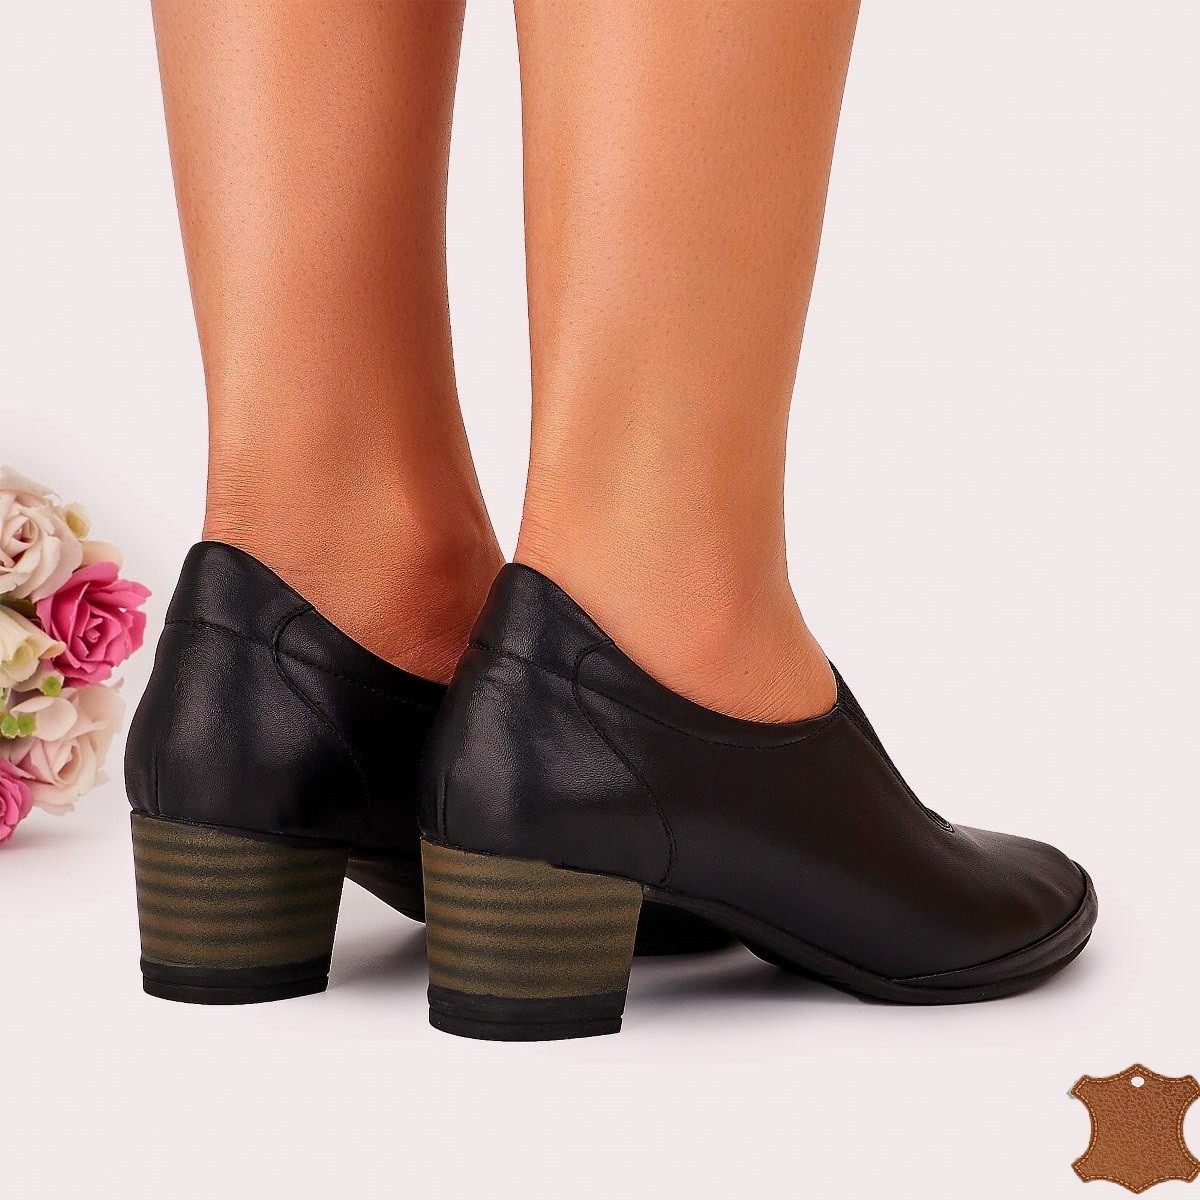 Pantofi Casual Dama Negri Piele Naturala Imptus